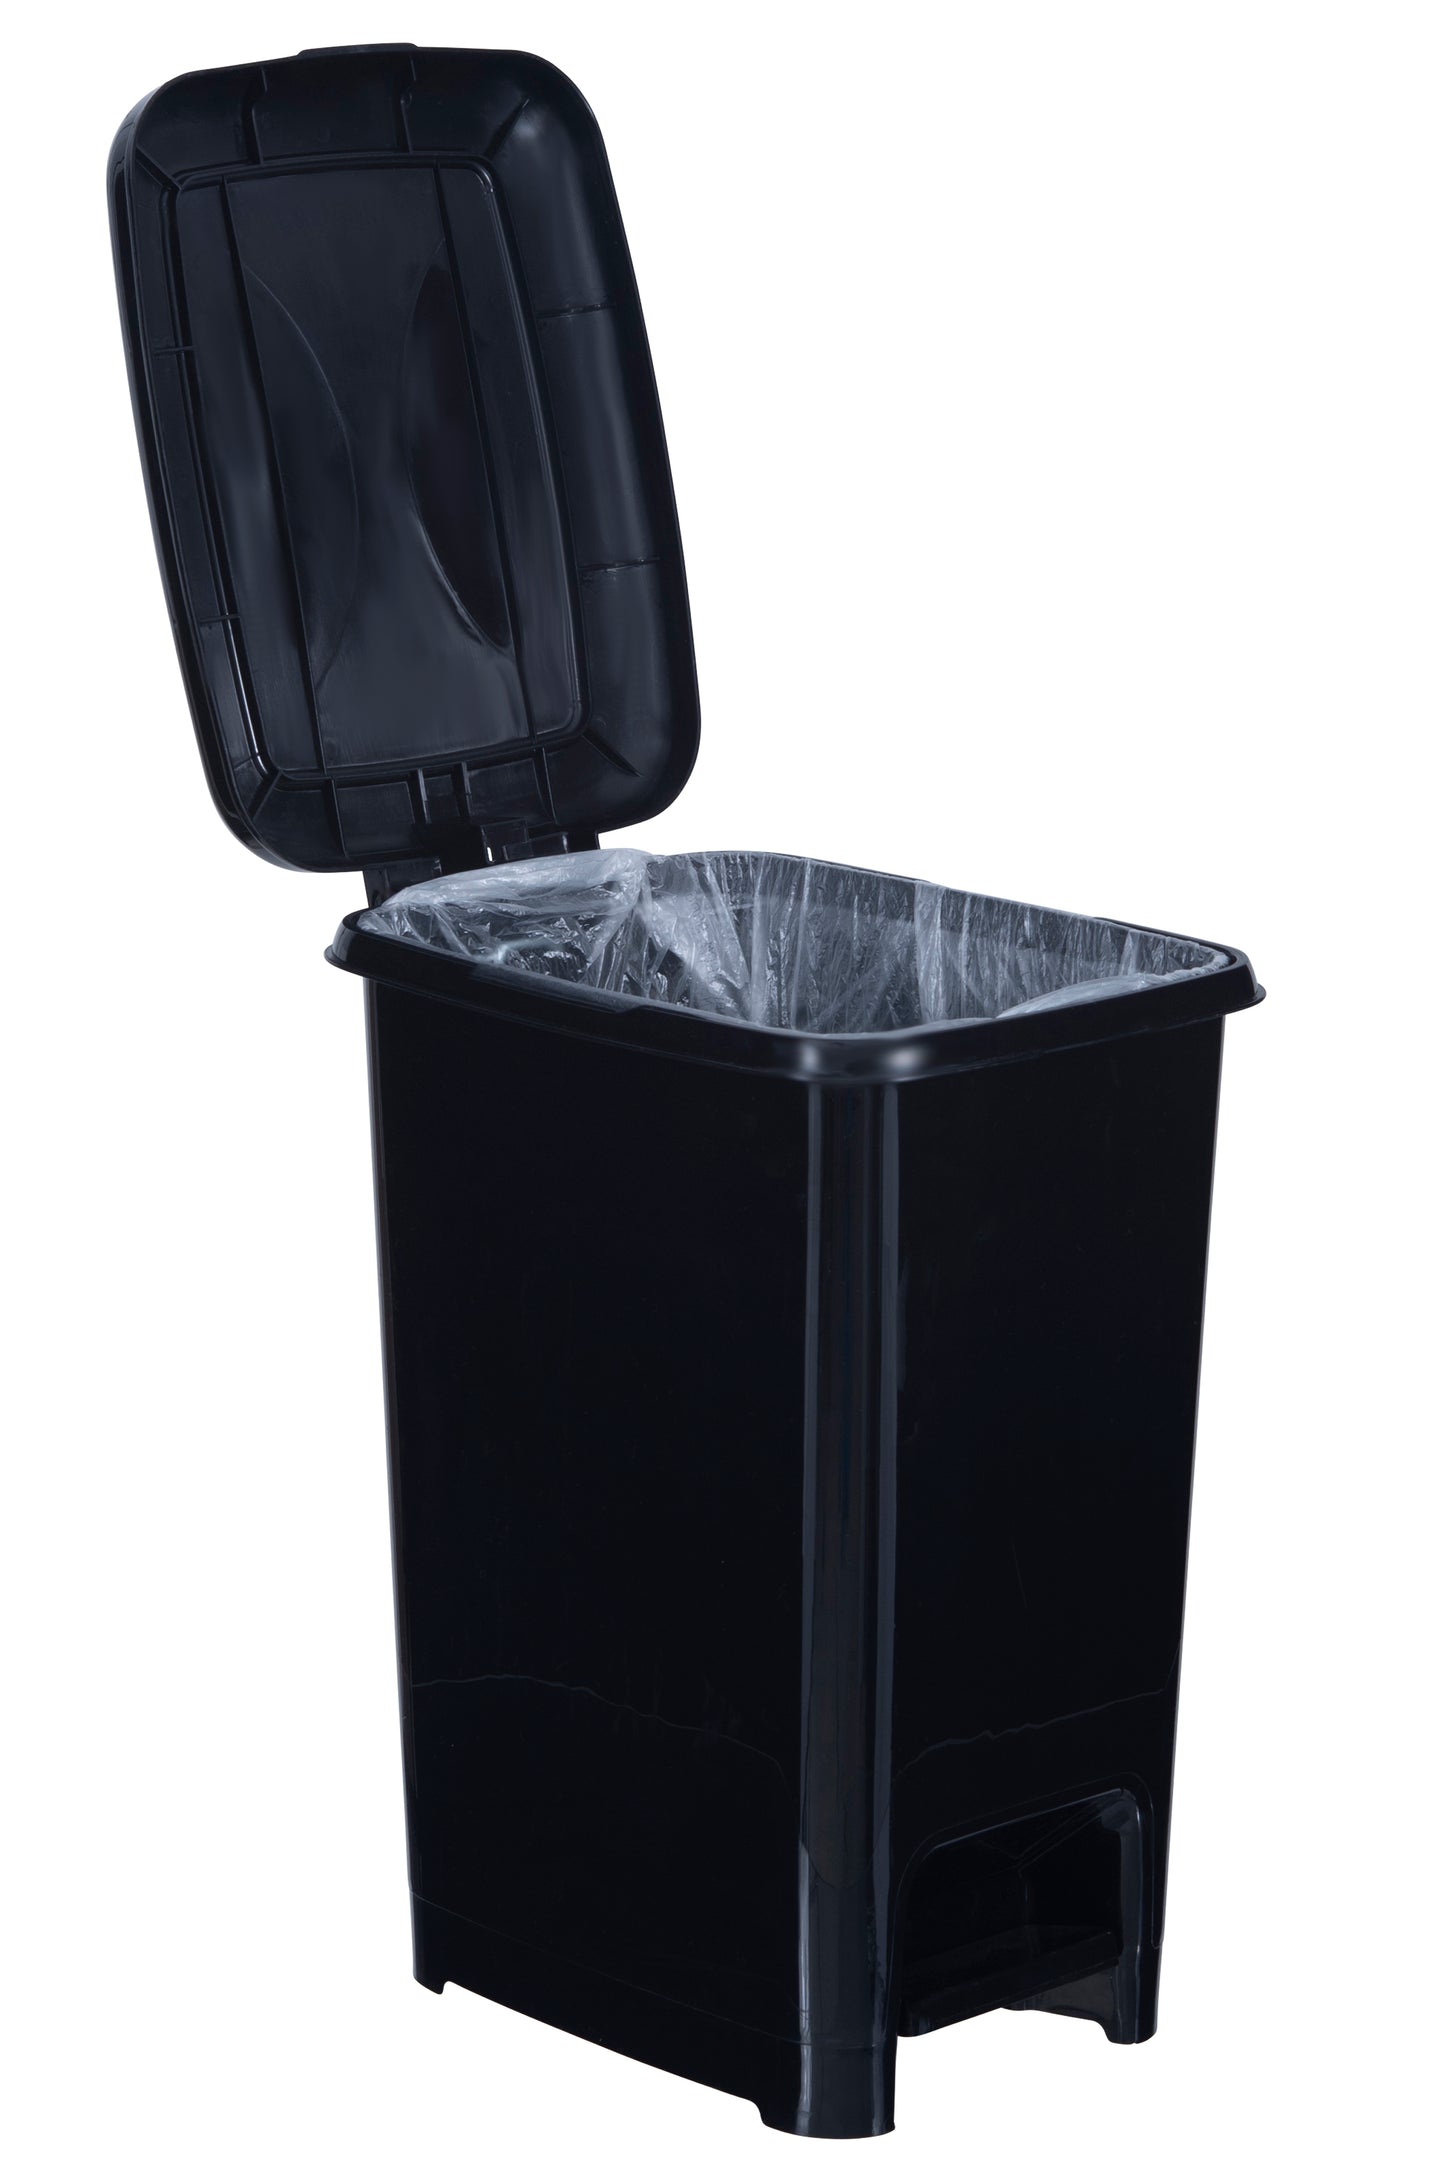 Slim Pedal Trash Can, 26 Qt - Black